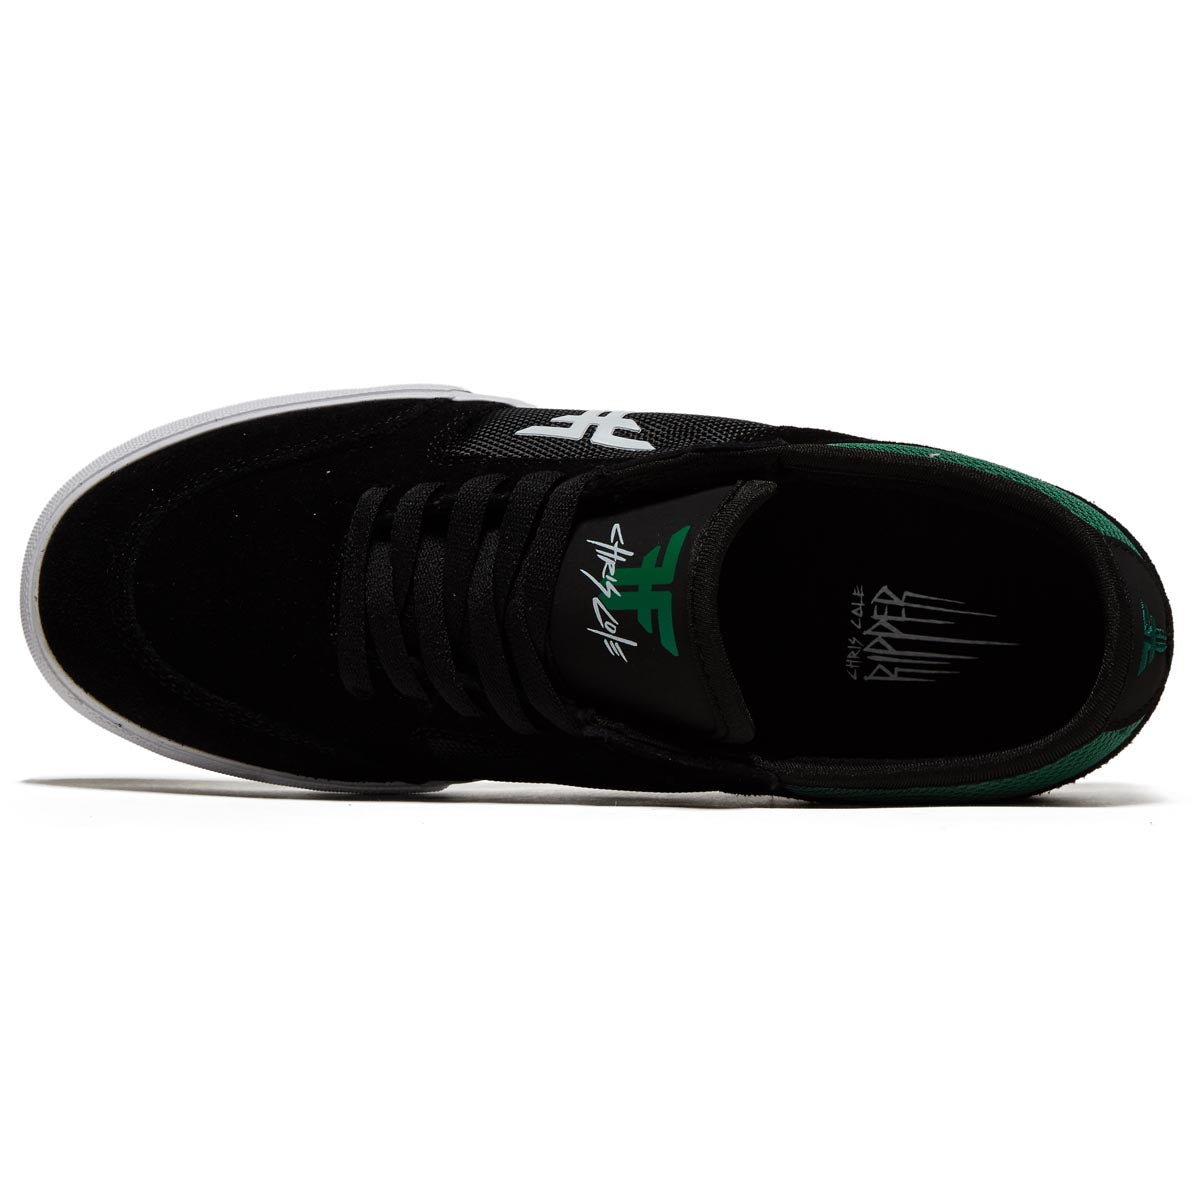 Fallen Ripper Shoes - Black/Green/White image 3